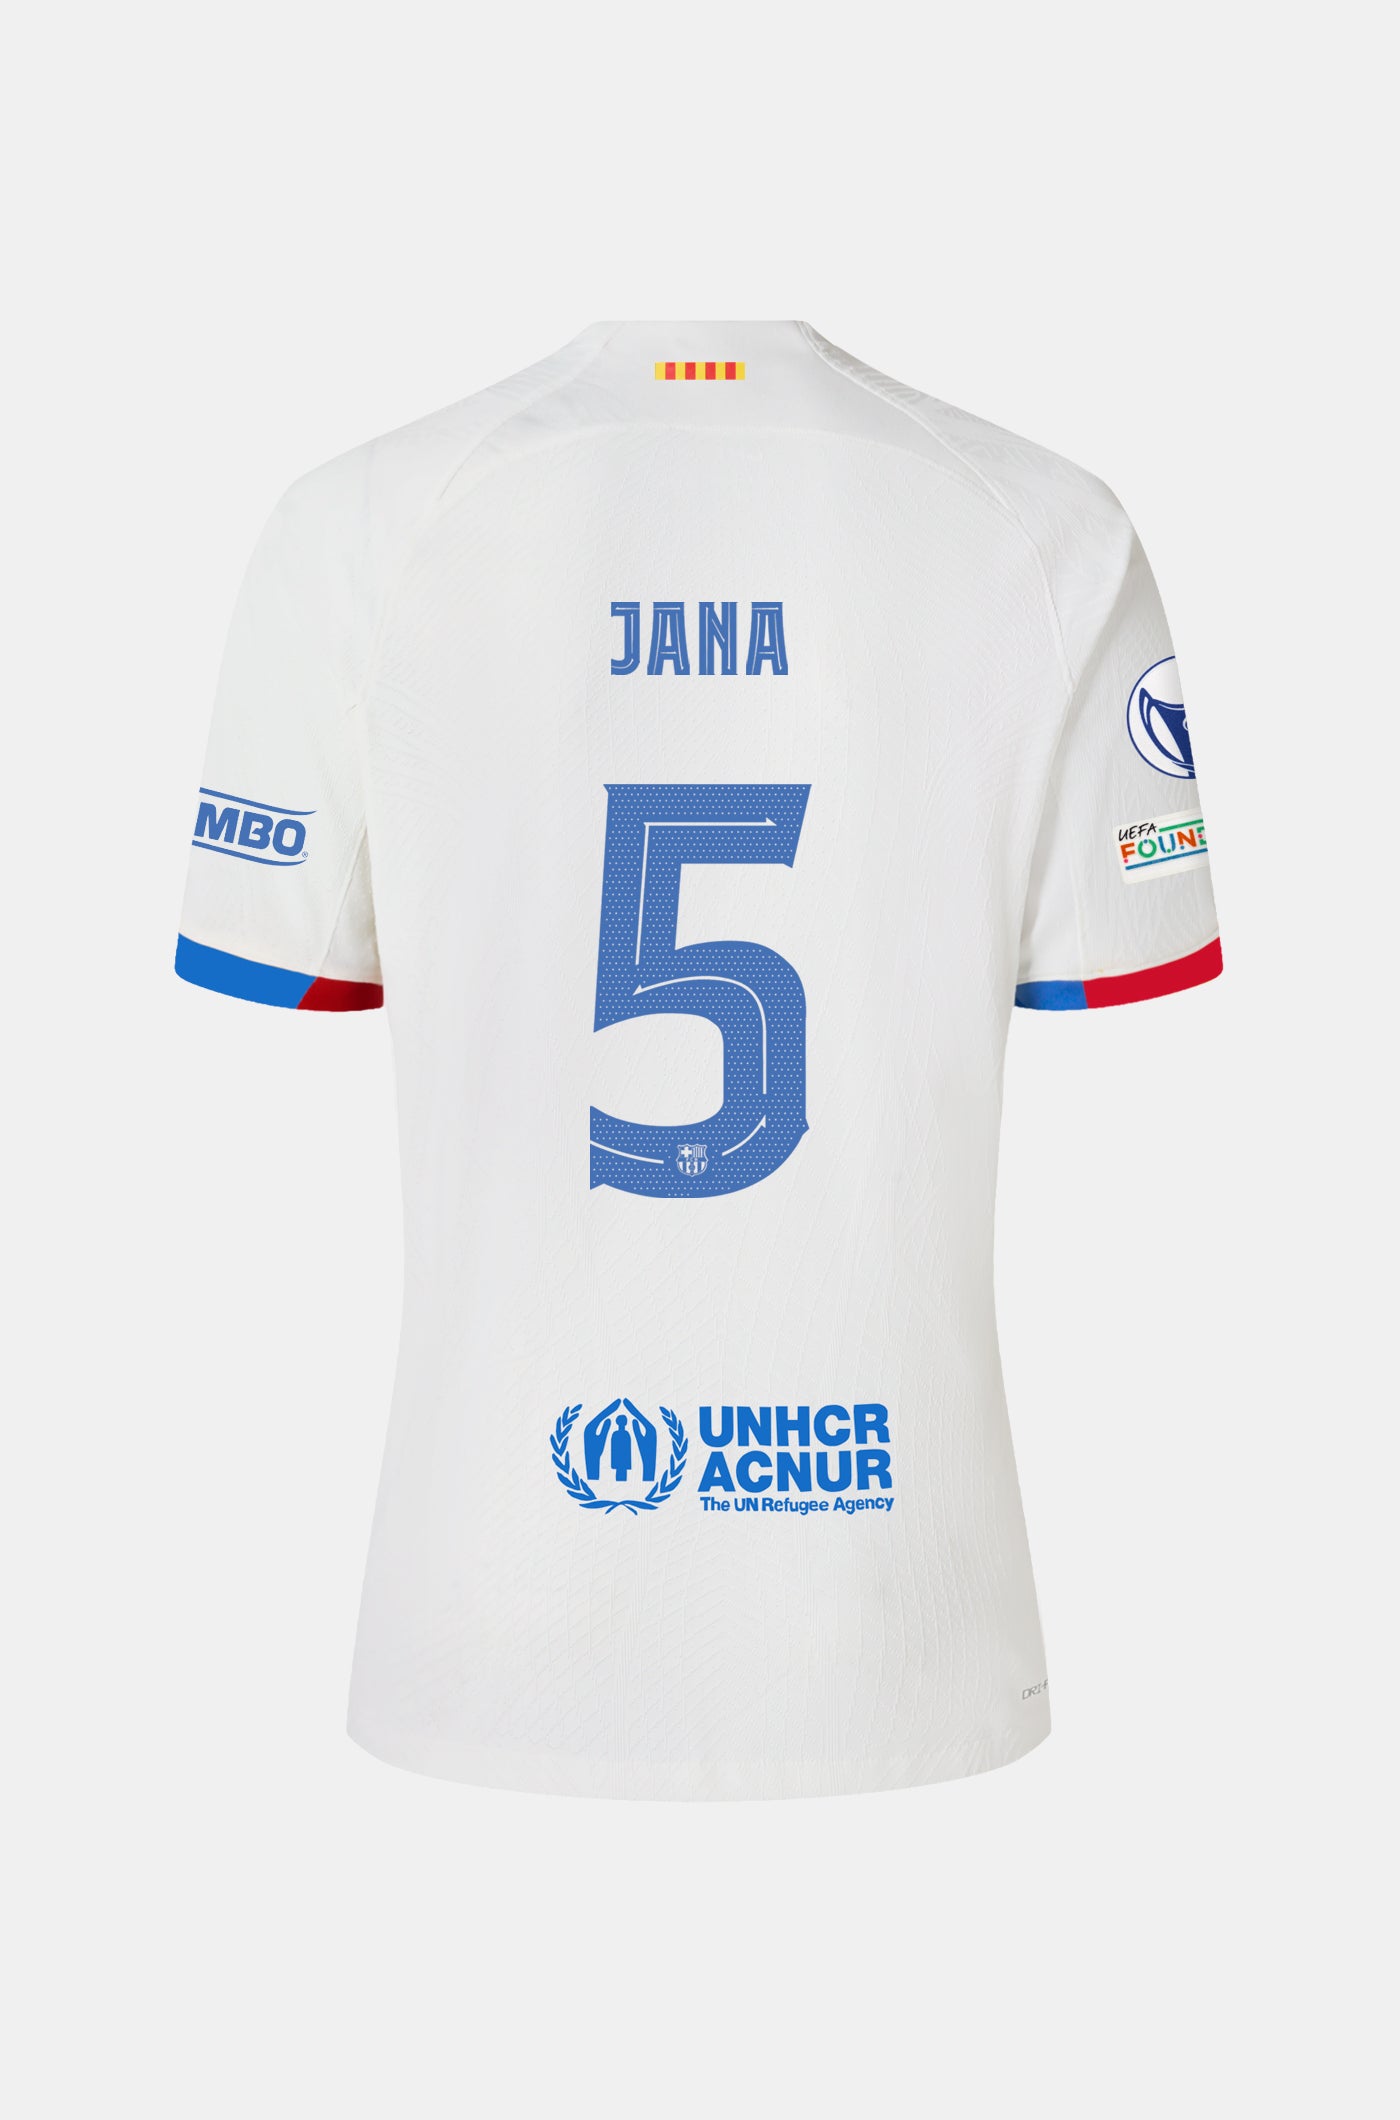 UWCL FC Barcelona away shirt 23/24 Player's Edition - JANA